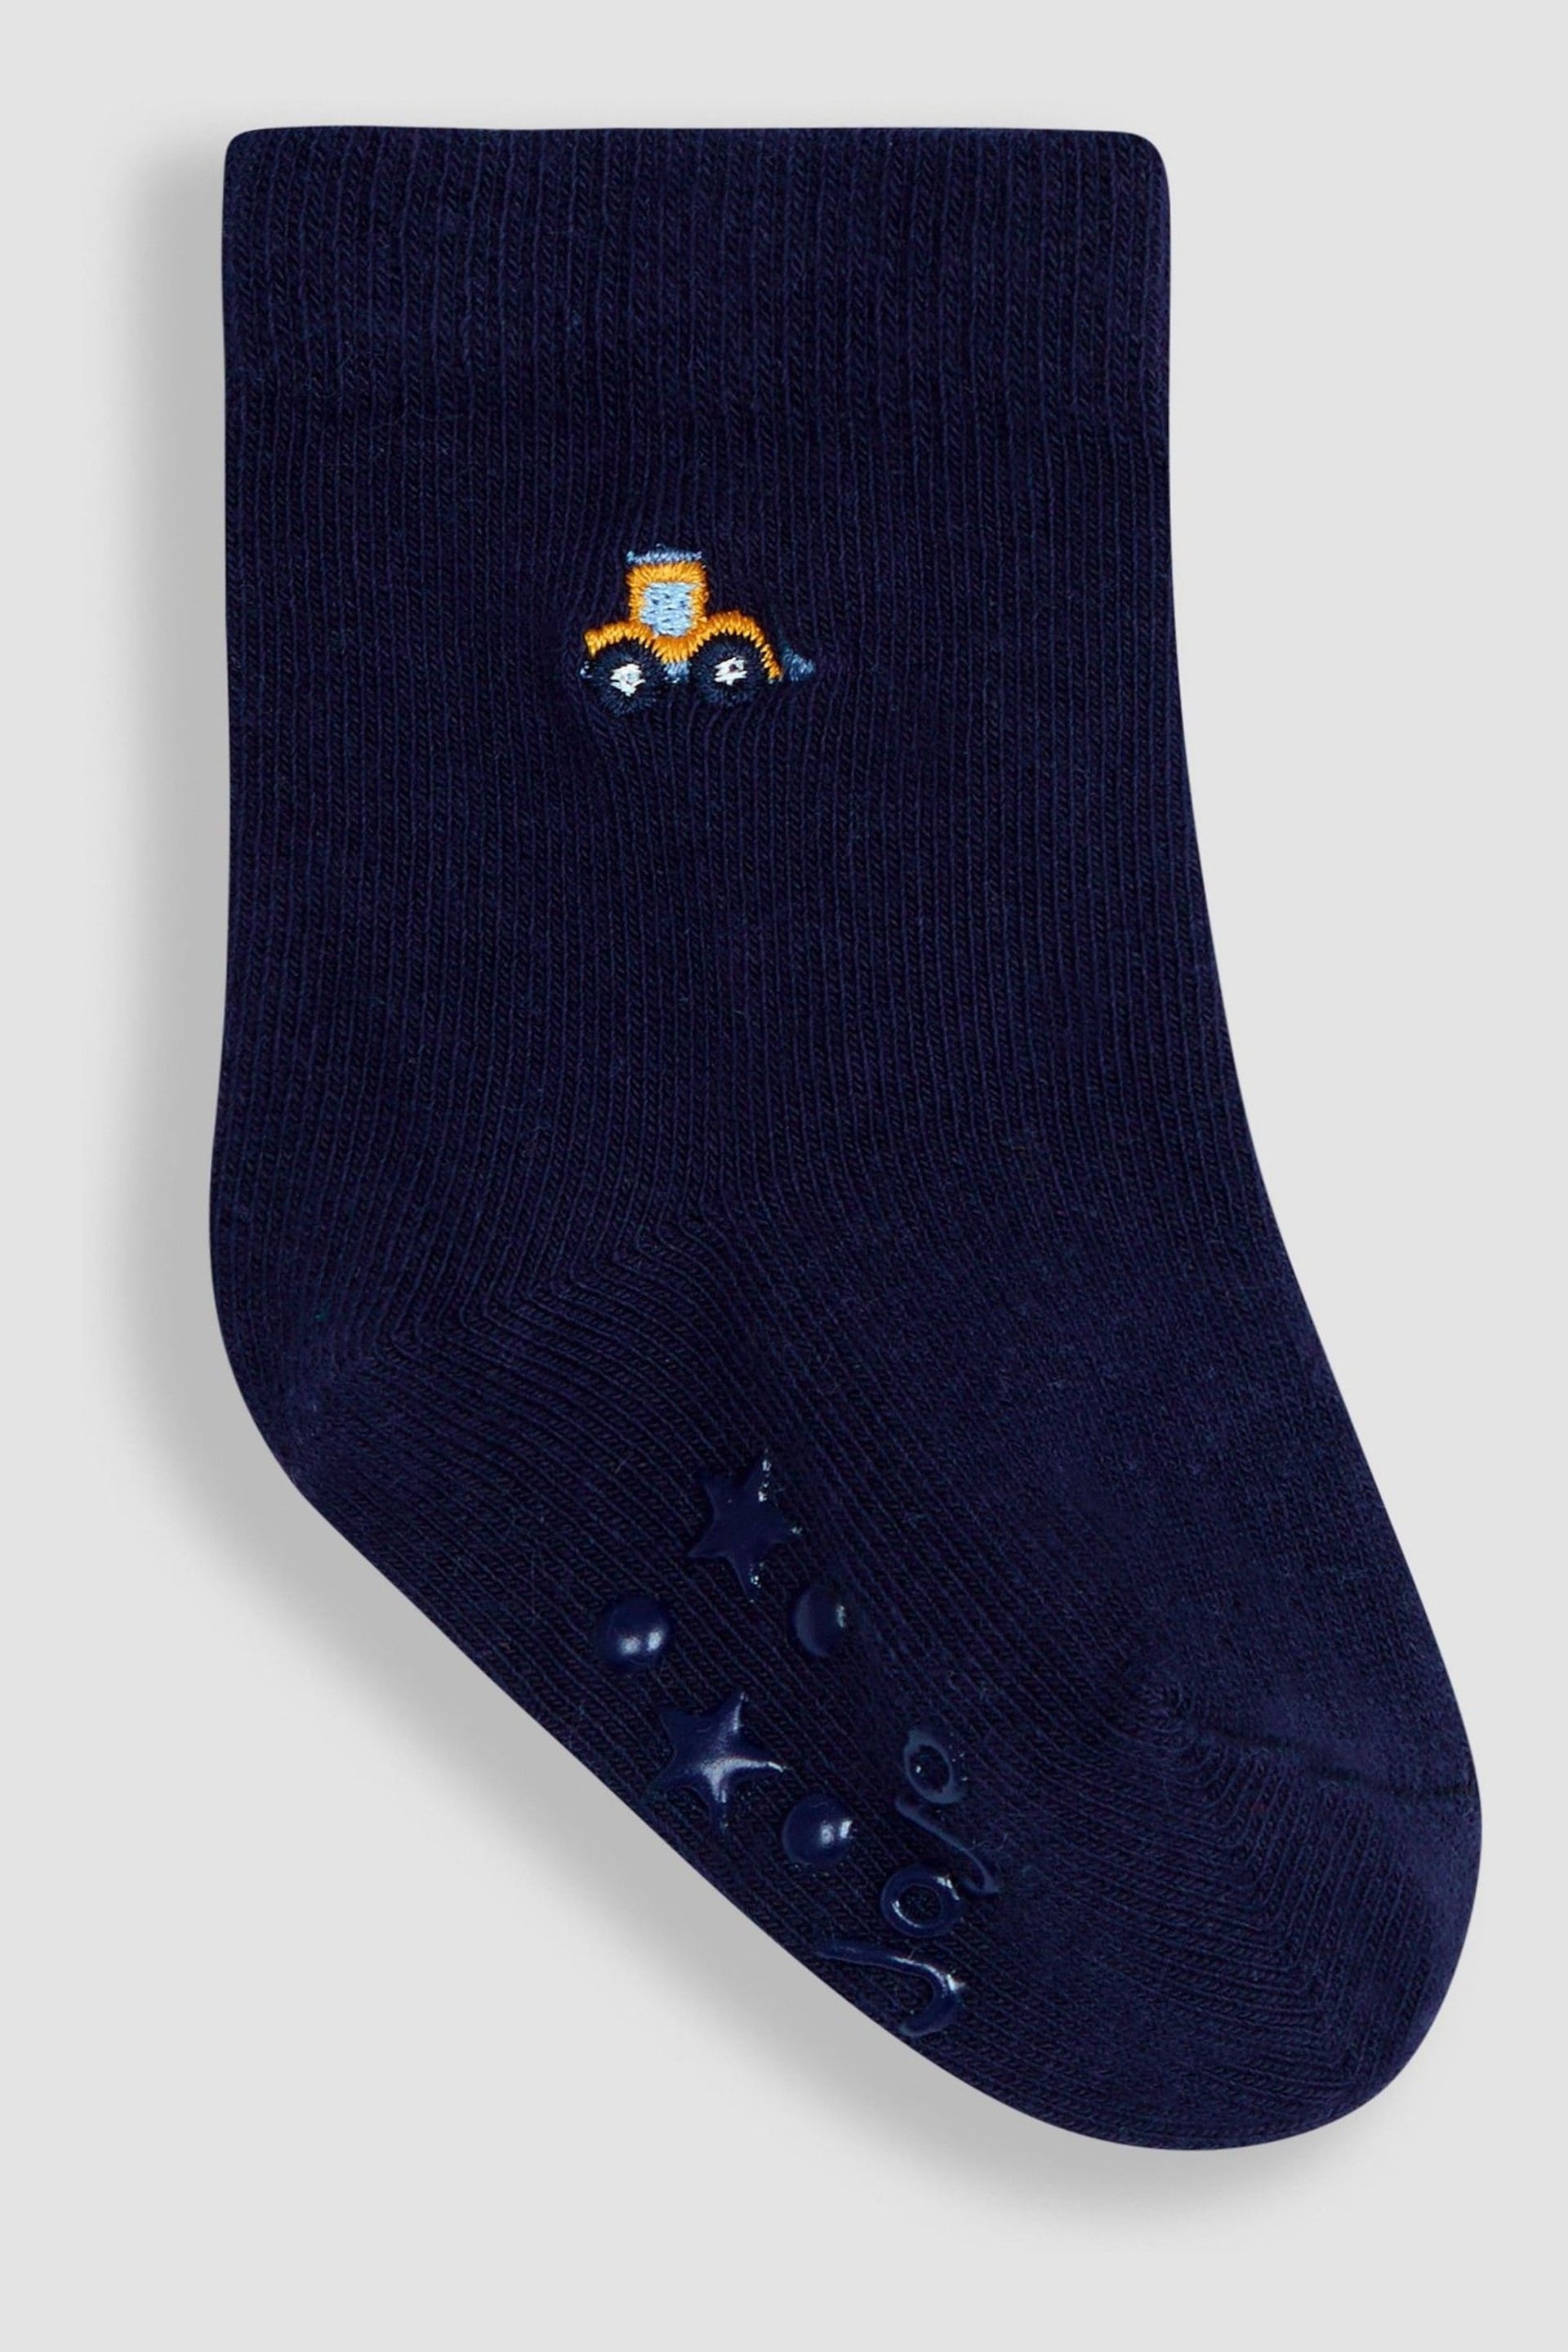 JoJo Maman Bébé Blue Digger 3-Pack Embroidered Socks - Image 4 of 4